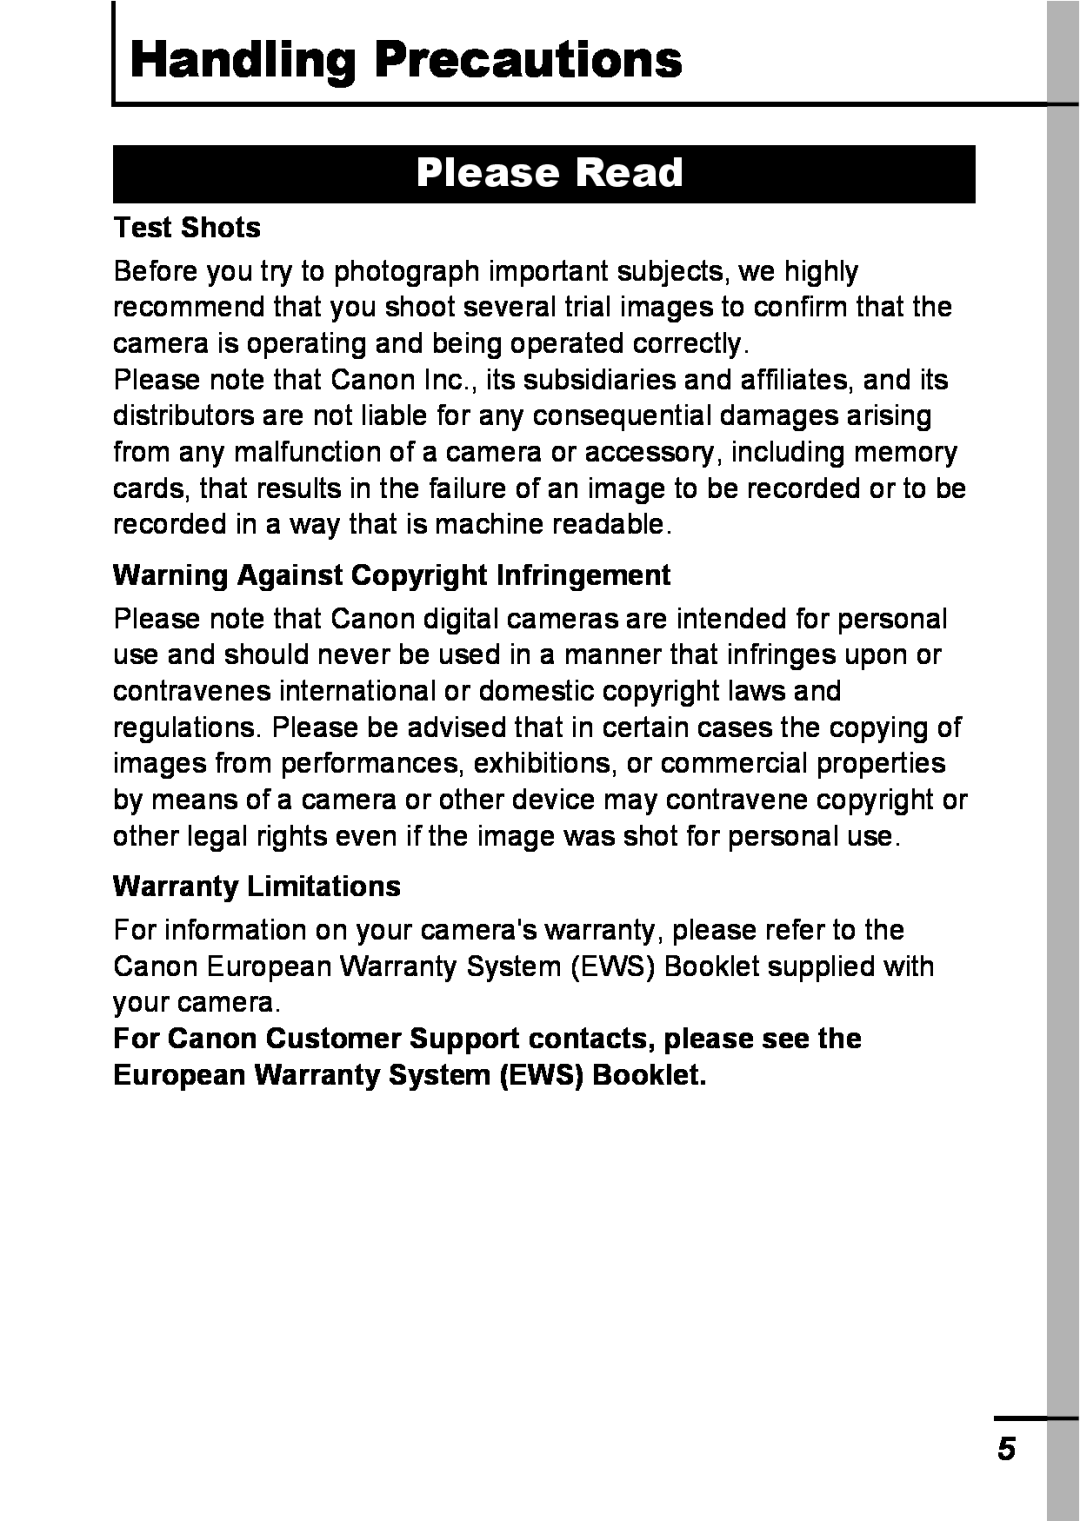 Canon A540 Handling Precautions, Please Read, Test Shots, Warning Against Copyright Infringement, Warranty Limitations 